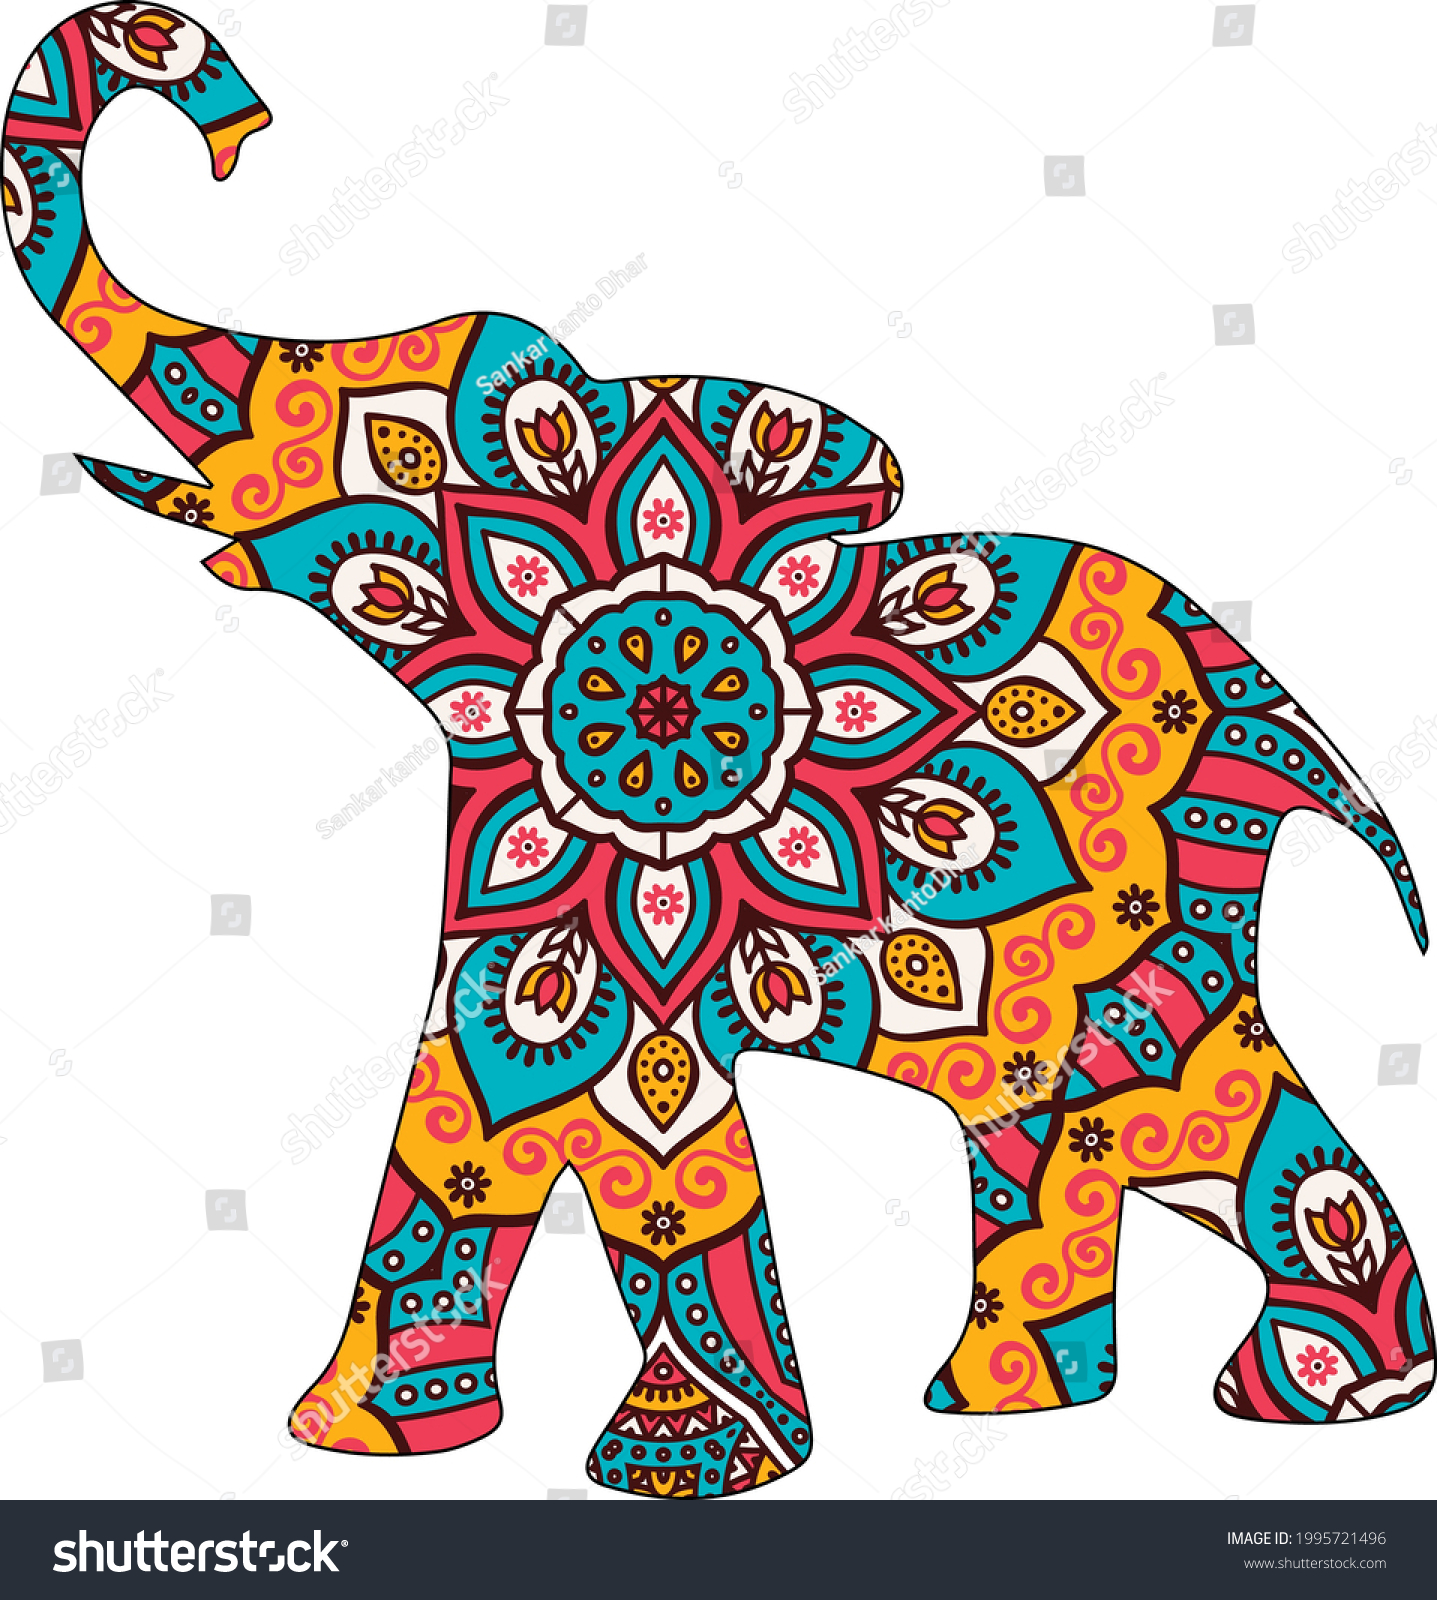 SVG of Elephant mandala colored illustration. Vector illustration. svg